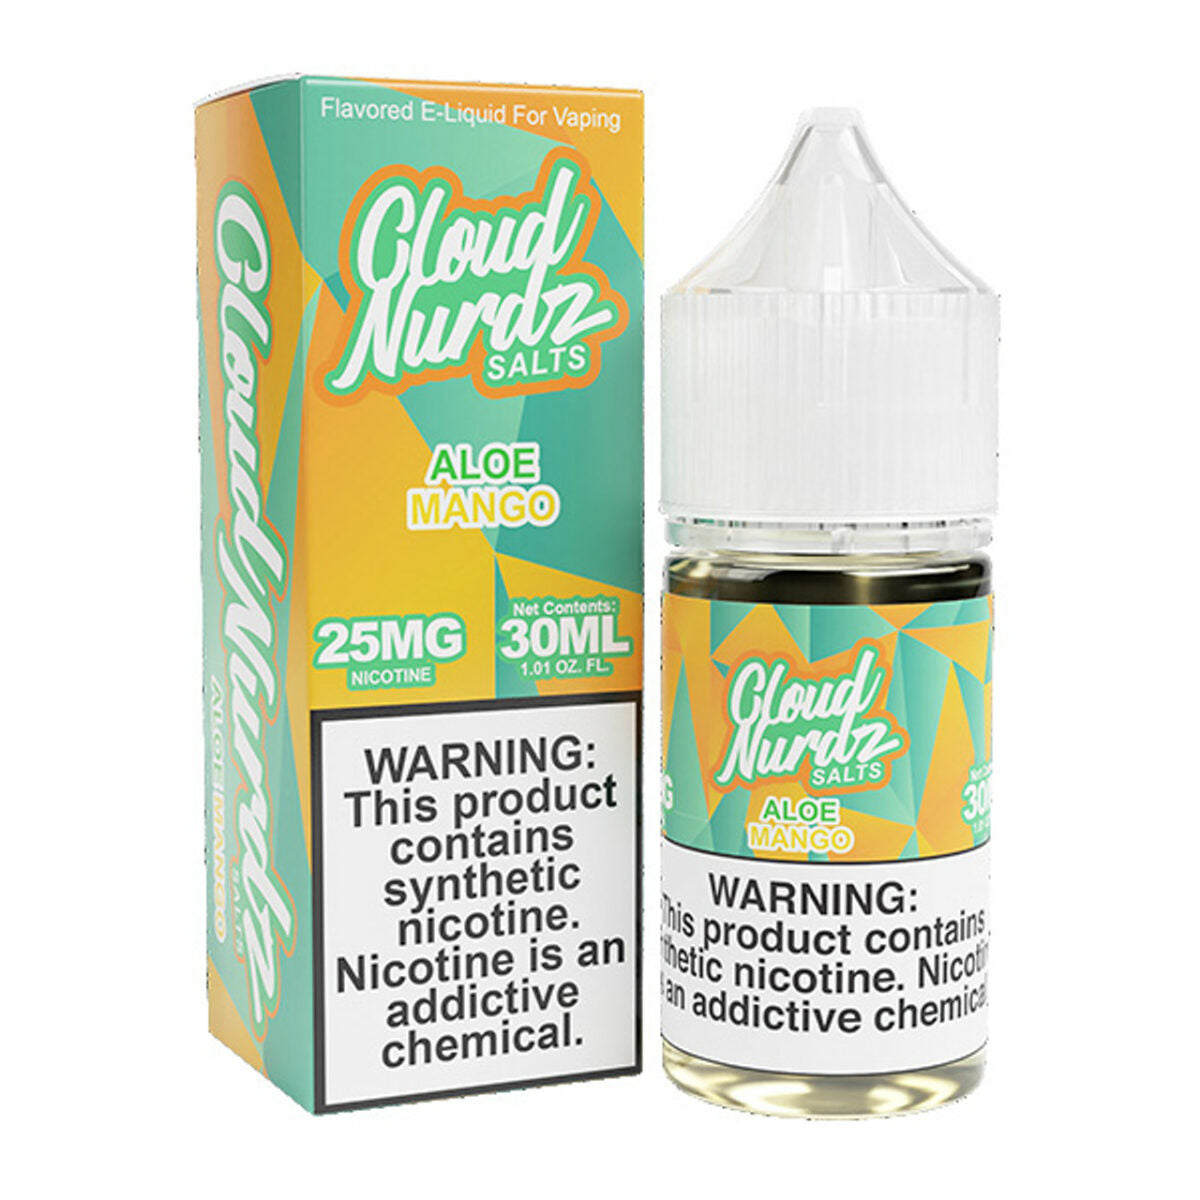 Cloud Nurdz Salt Series E-Liquid 30mL Aloe Mango with packaging